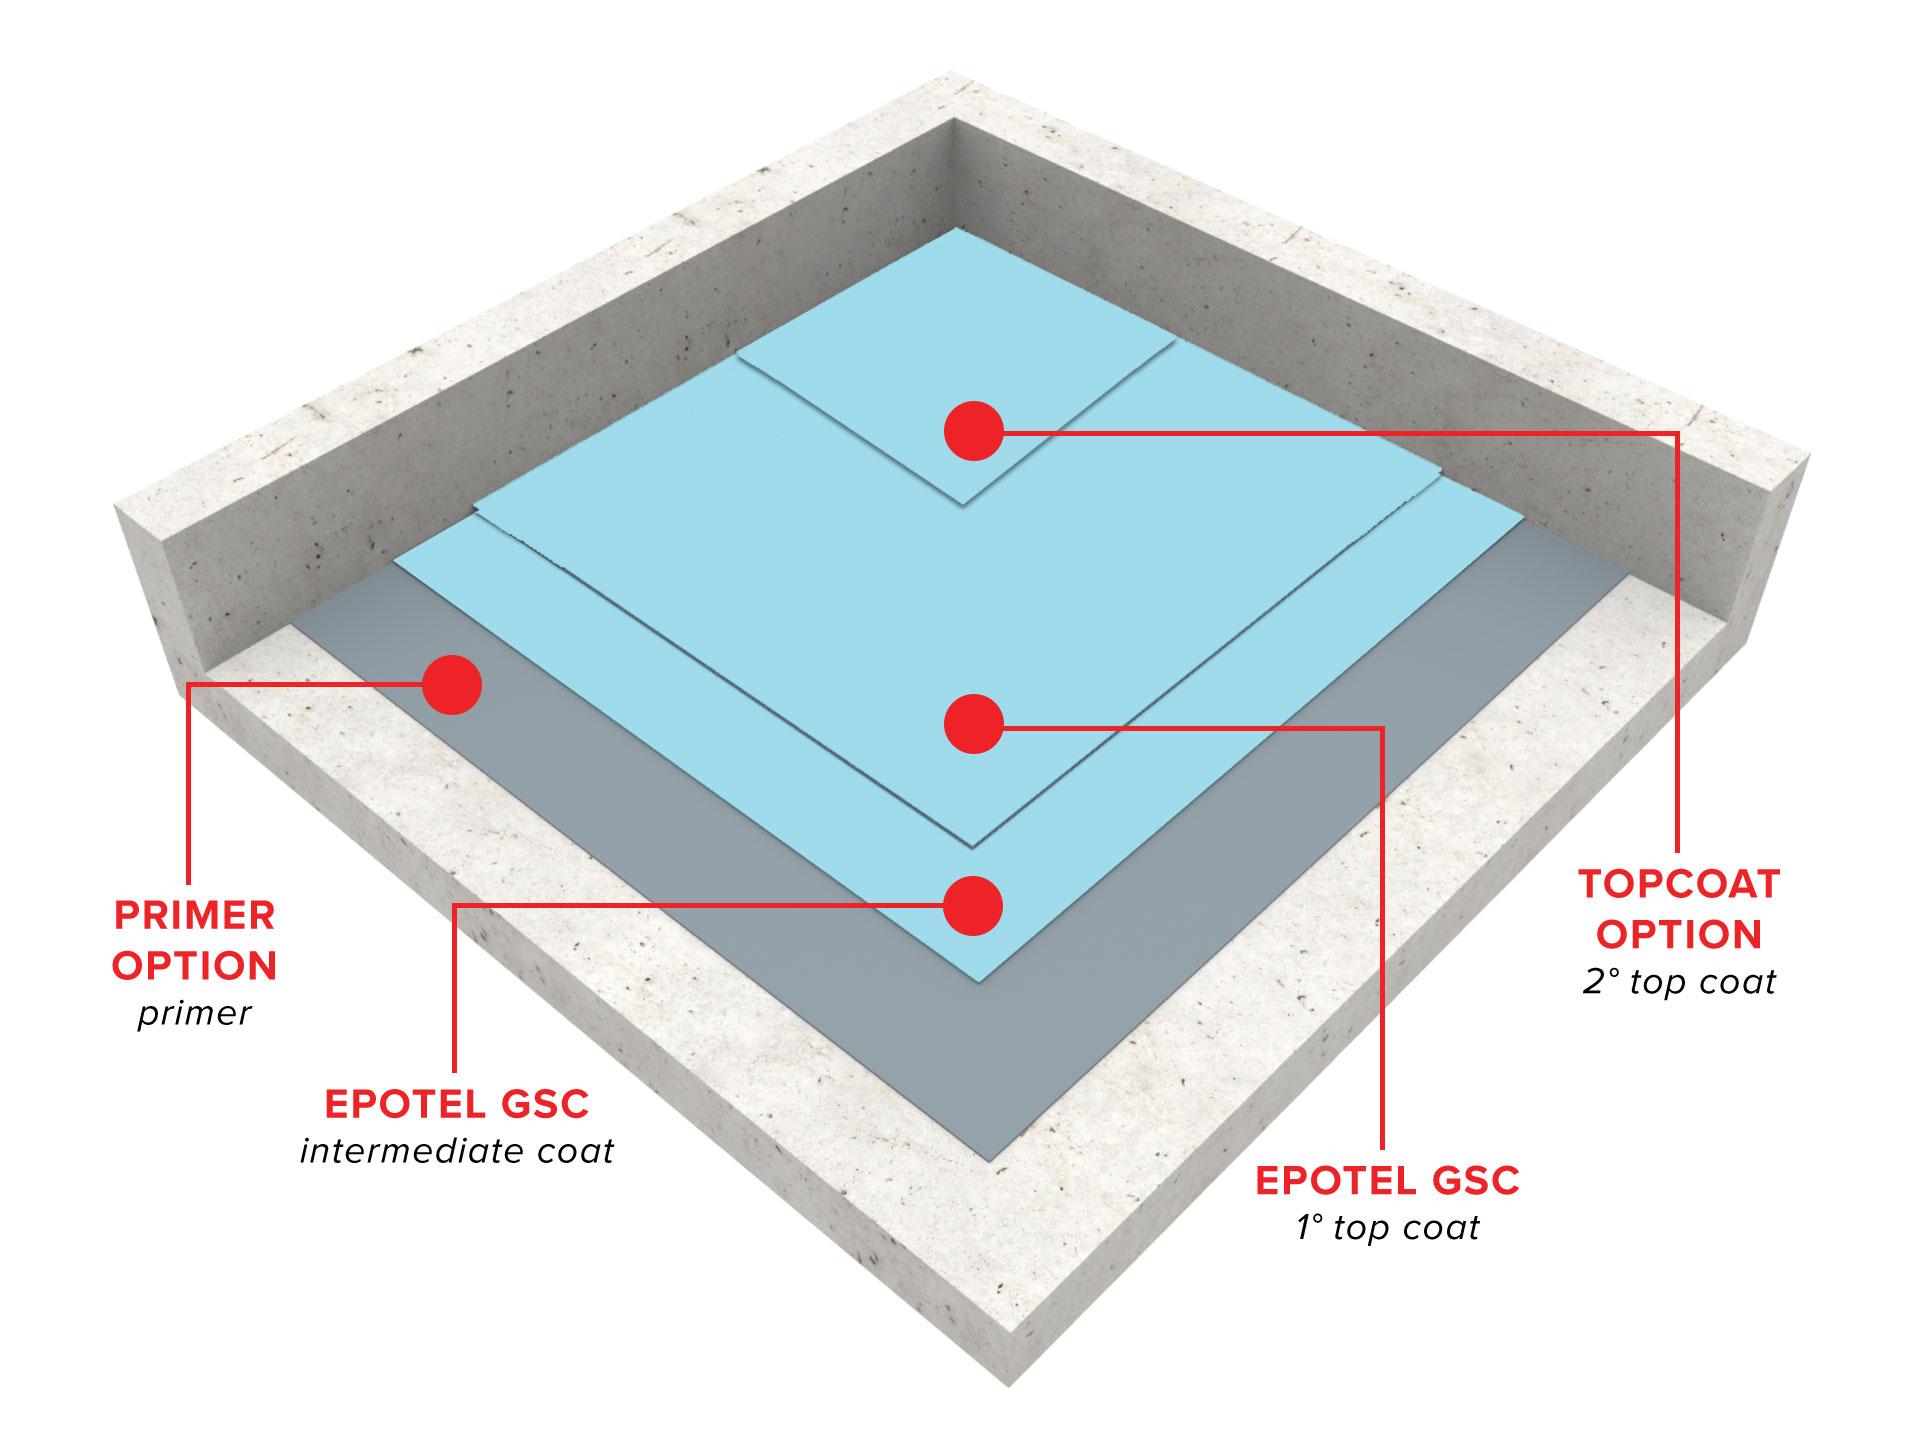 epotel-gsc-high-performance-floor-coating-system1567611705.jpg